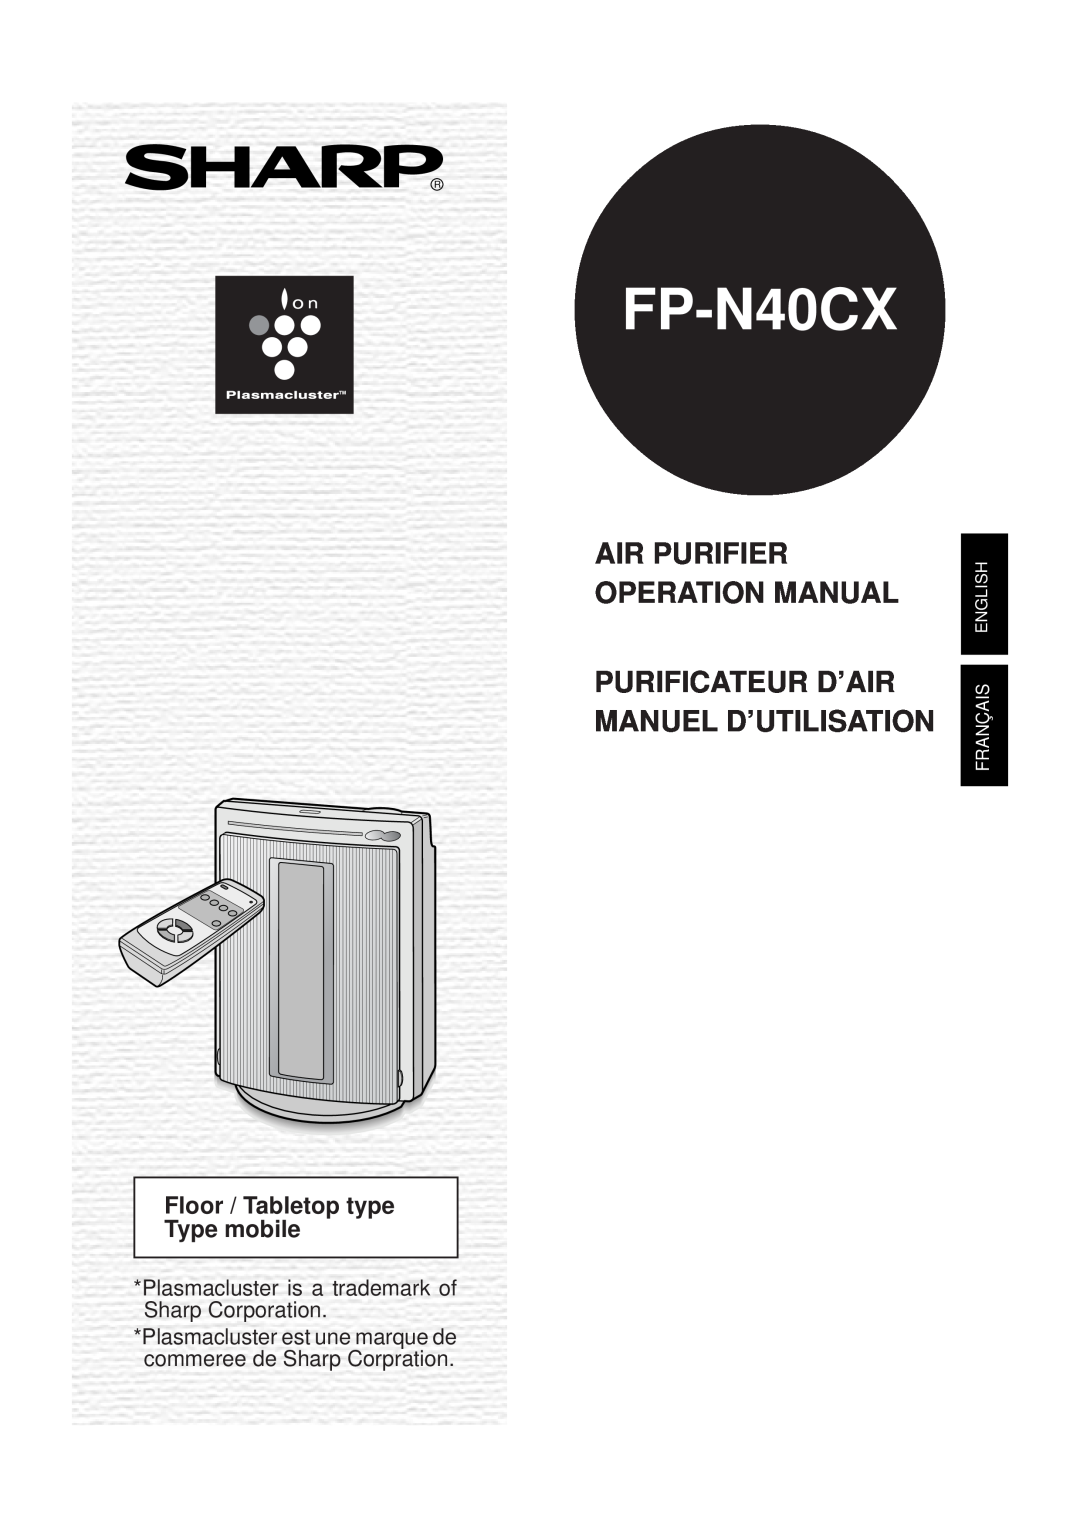 Sharp FP-N40CX operation manual Manuel D’Utilisation, Plasmacluster is a trademark of Sharp Corporation, English Français 